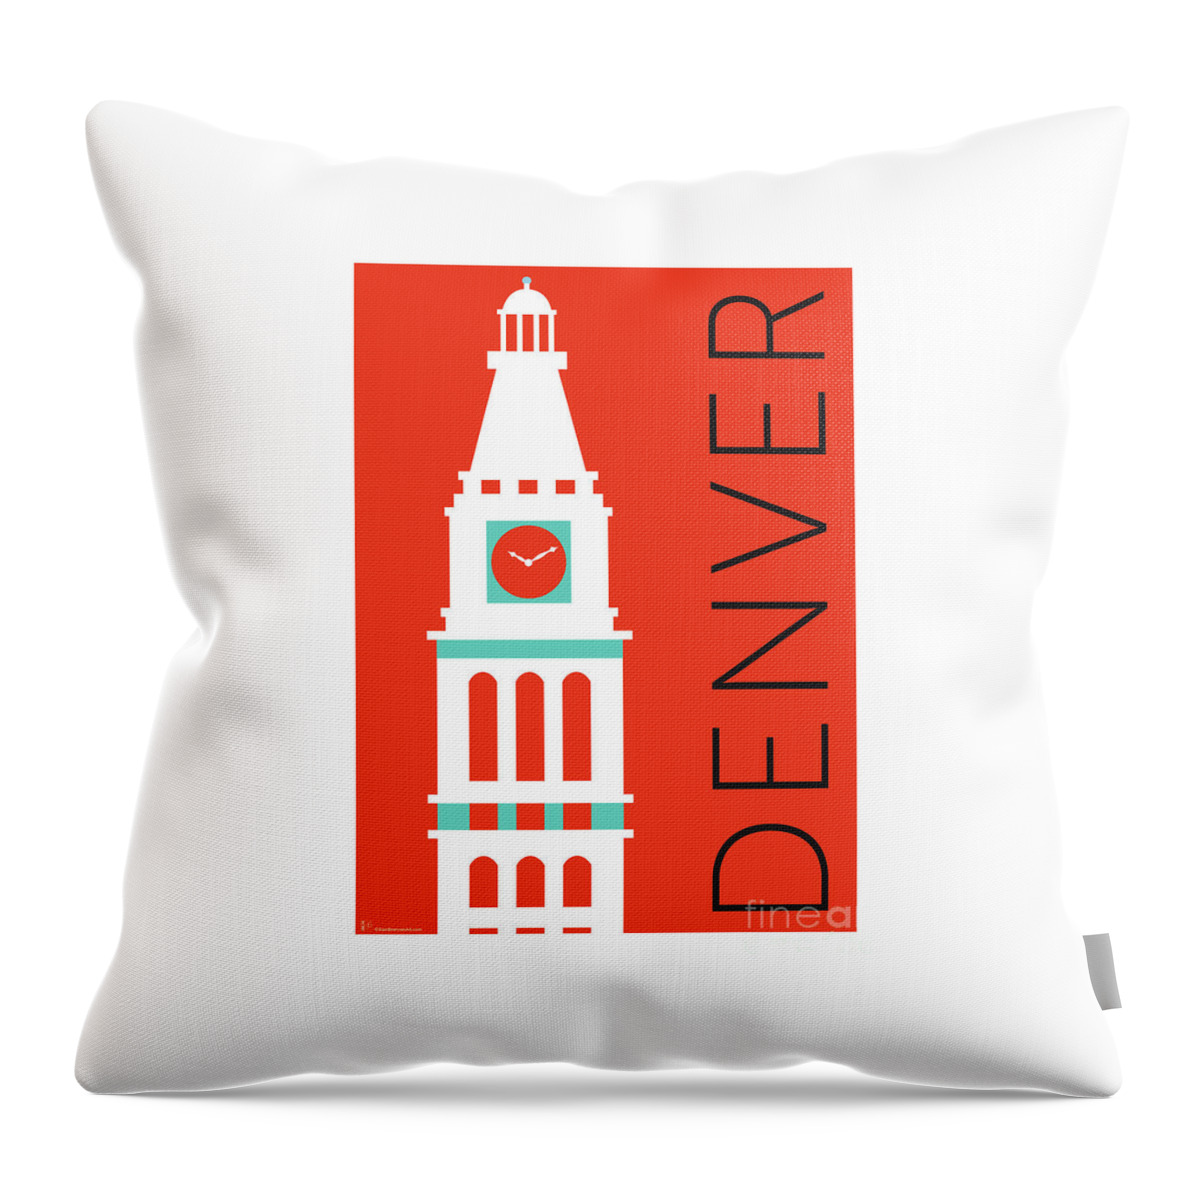 Denver Throw Pillow featuring the digital art DENVER D and F Tower/Orange by Sam Brennan